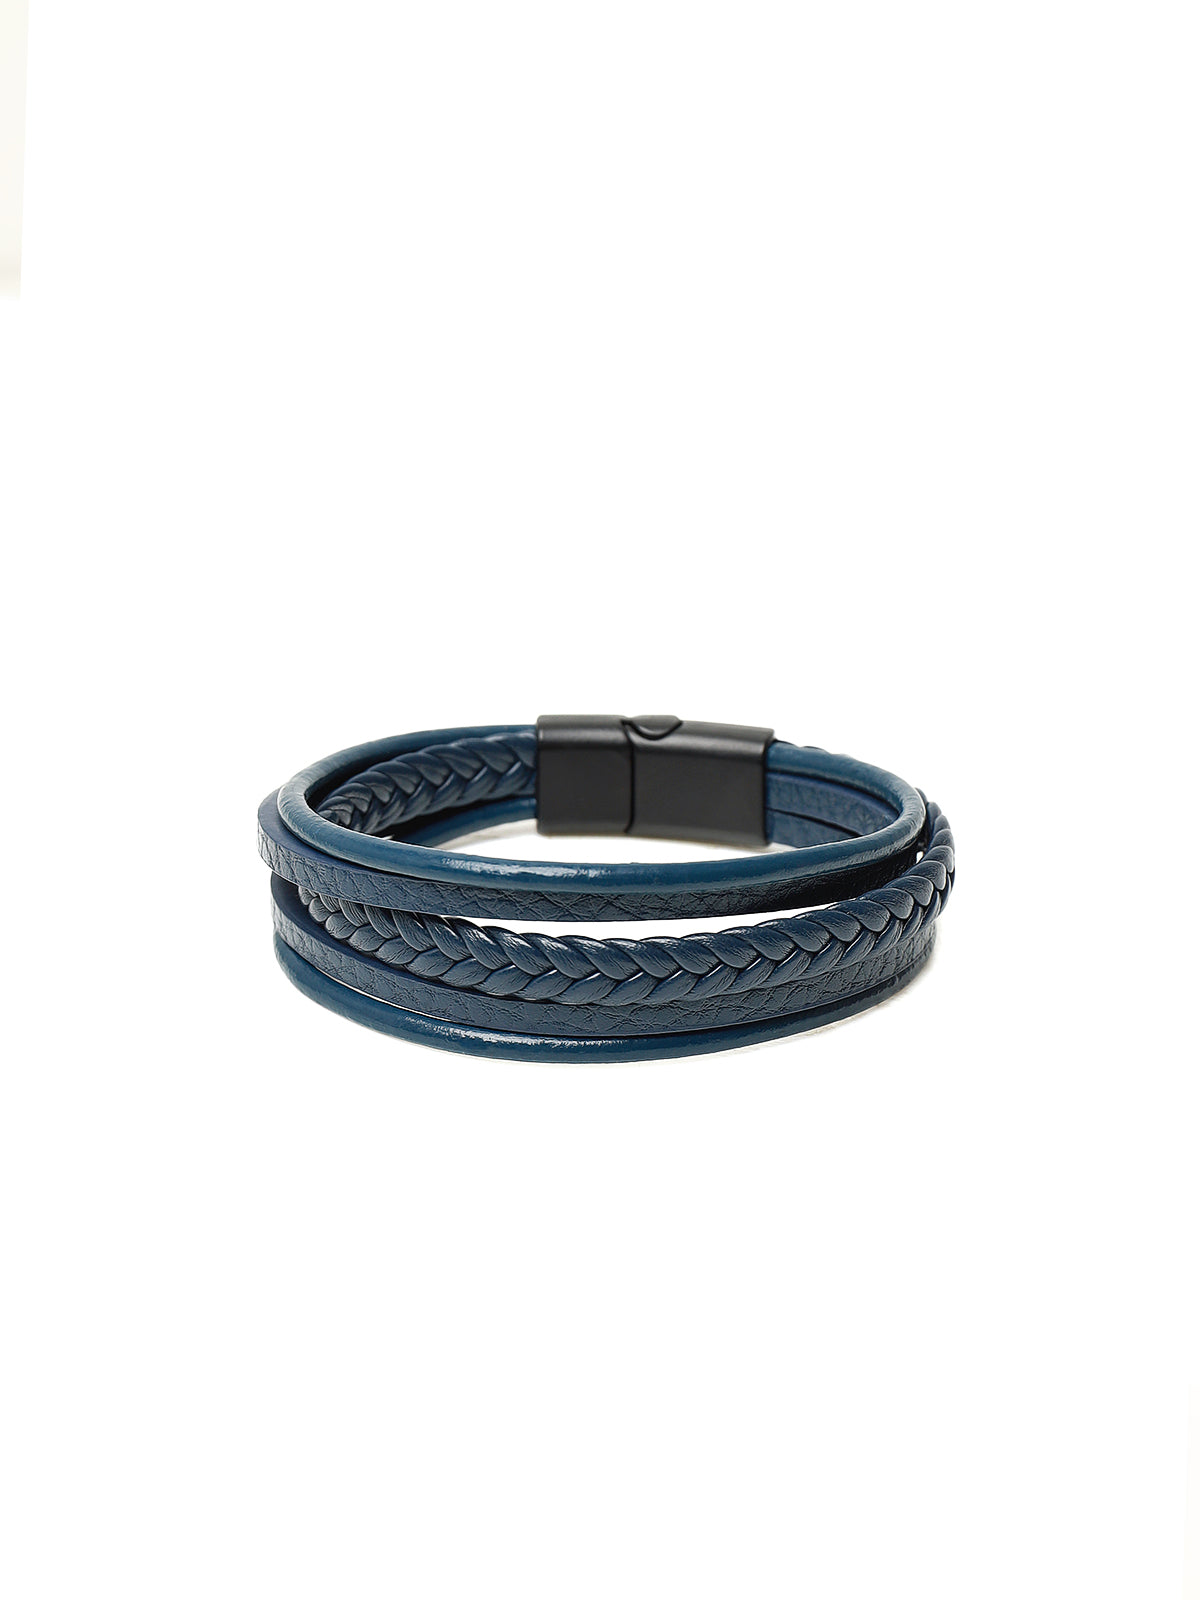 Blue Leather Bracelet - FABR24-014